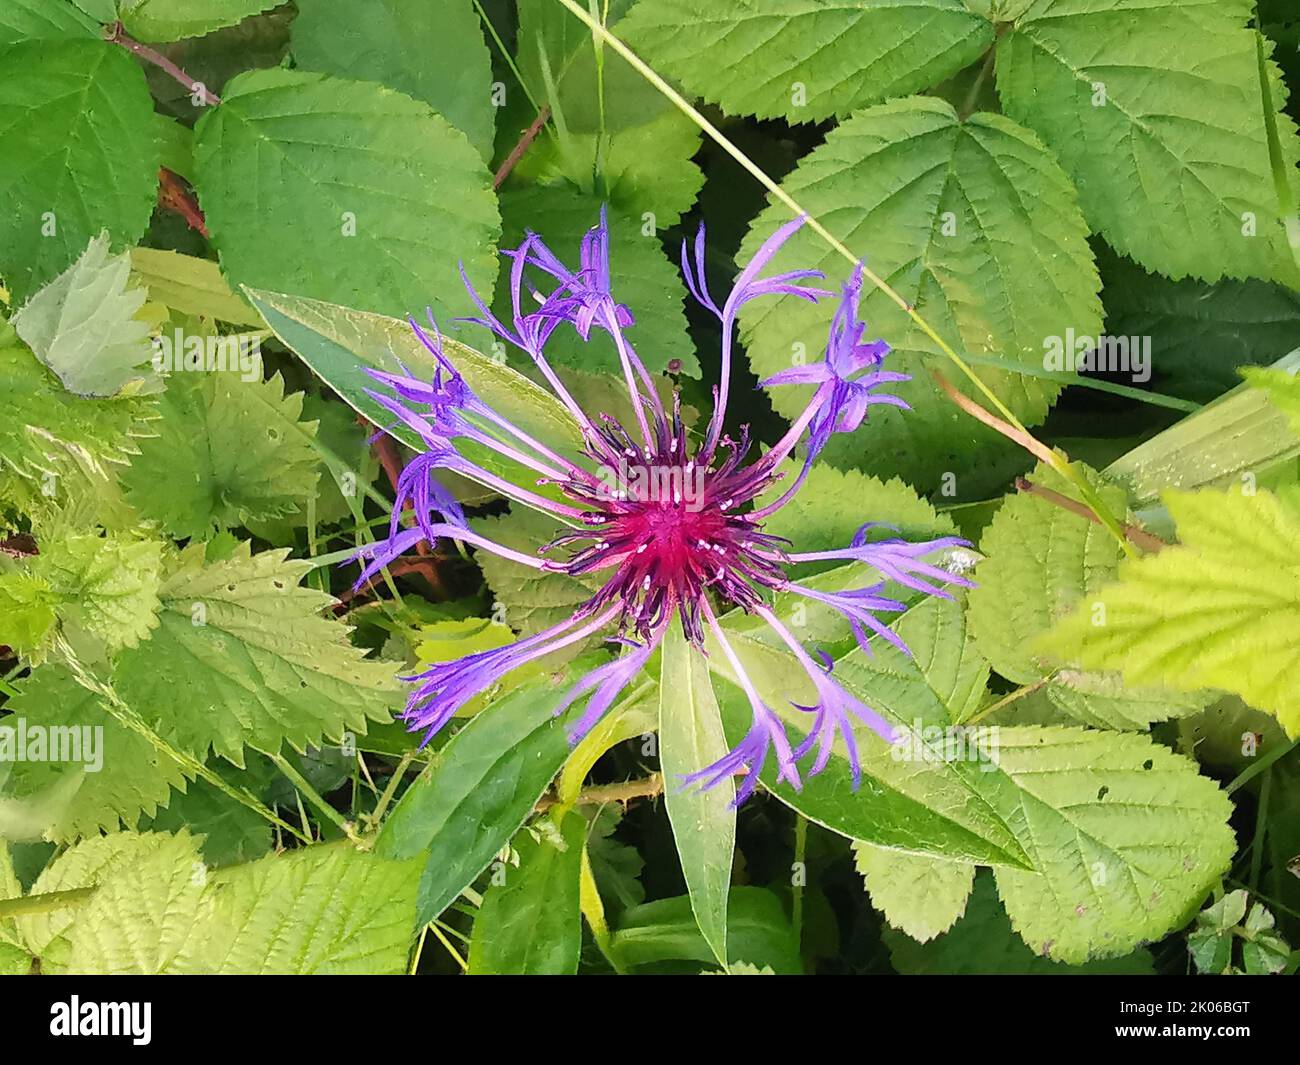 Beautiful purple daisy thistle flower against green foliage background Stock Photo